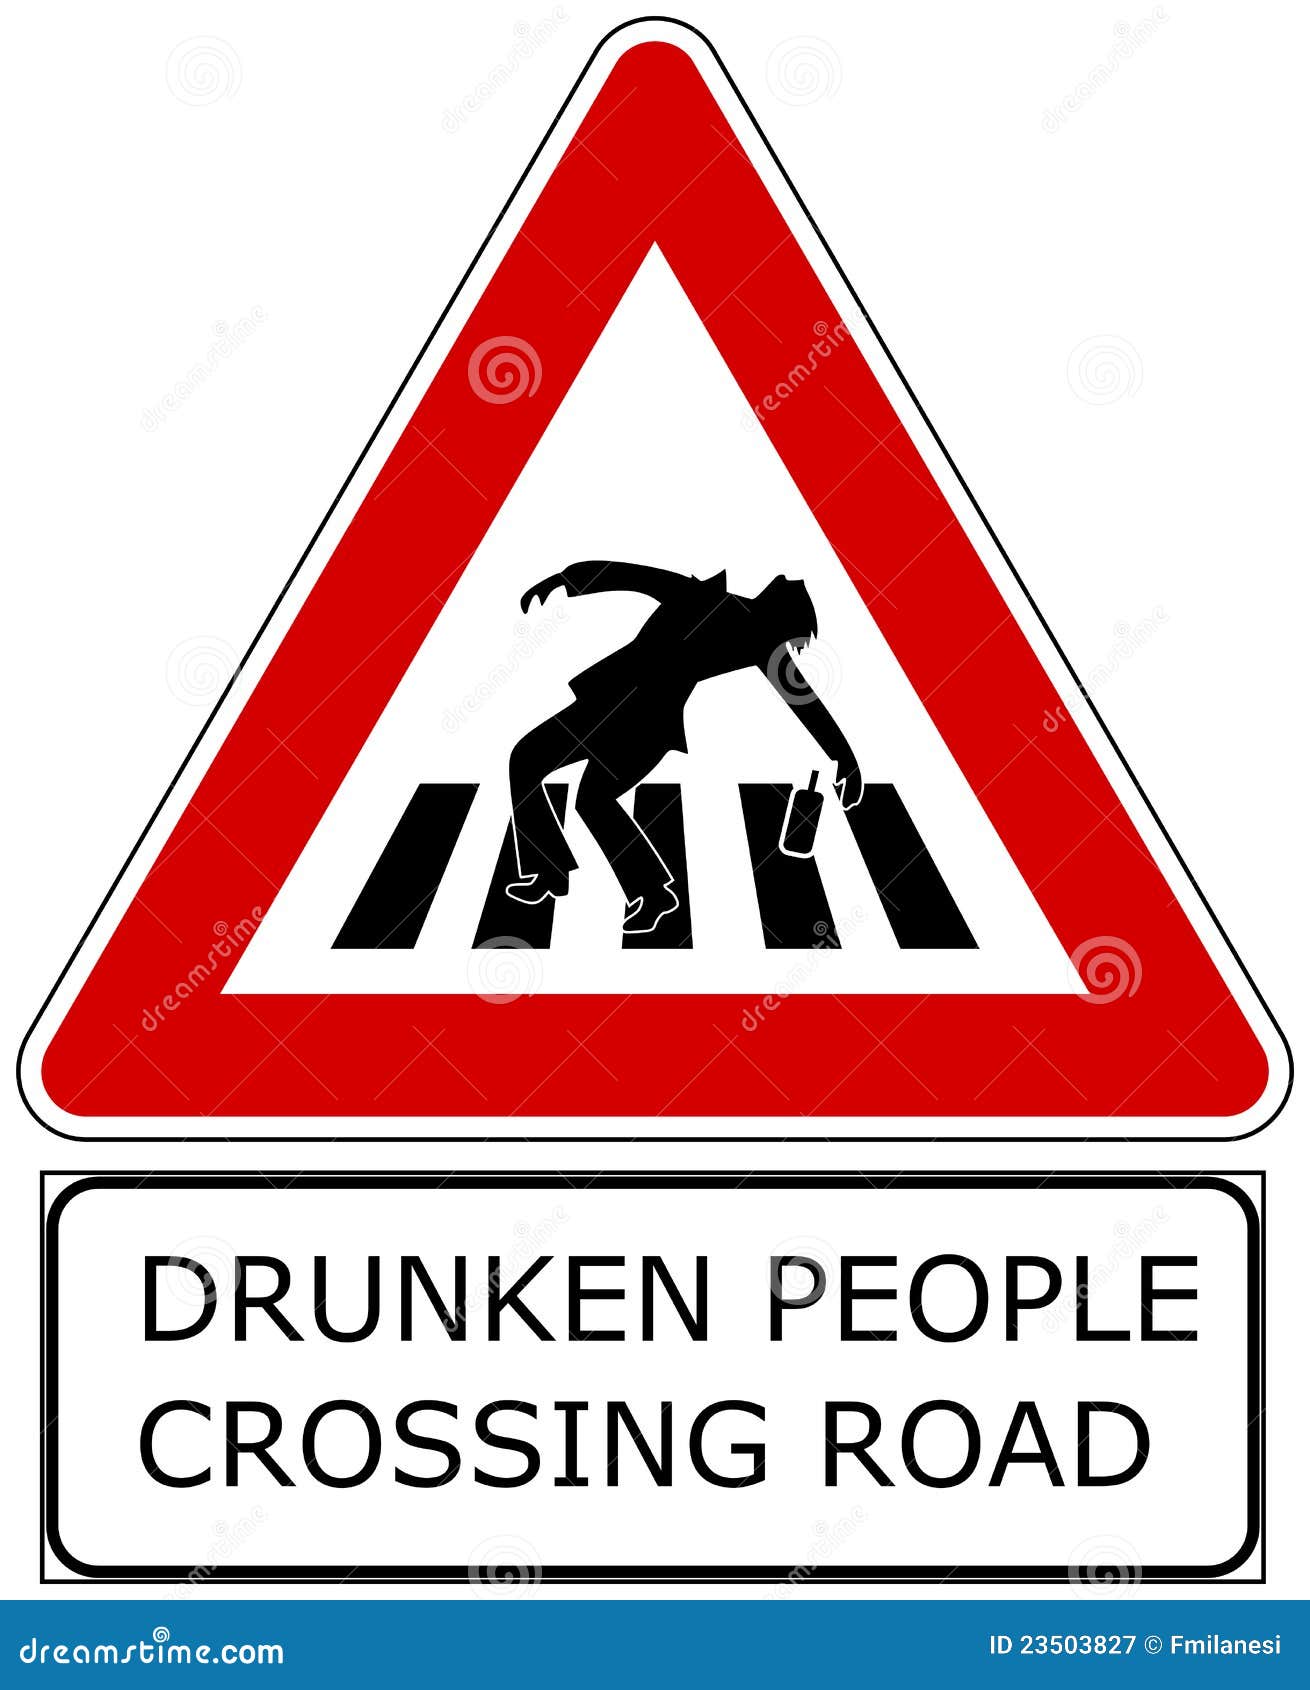 drunken people